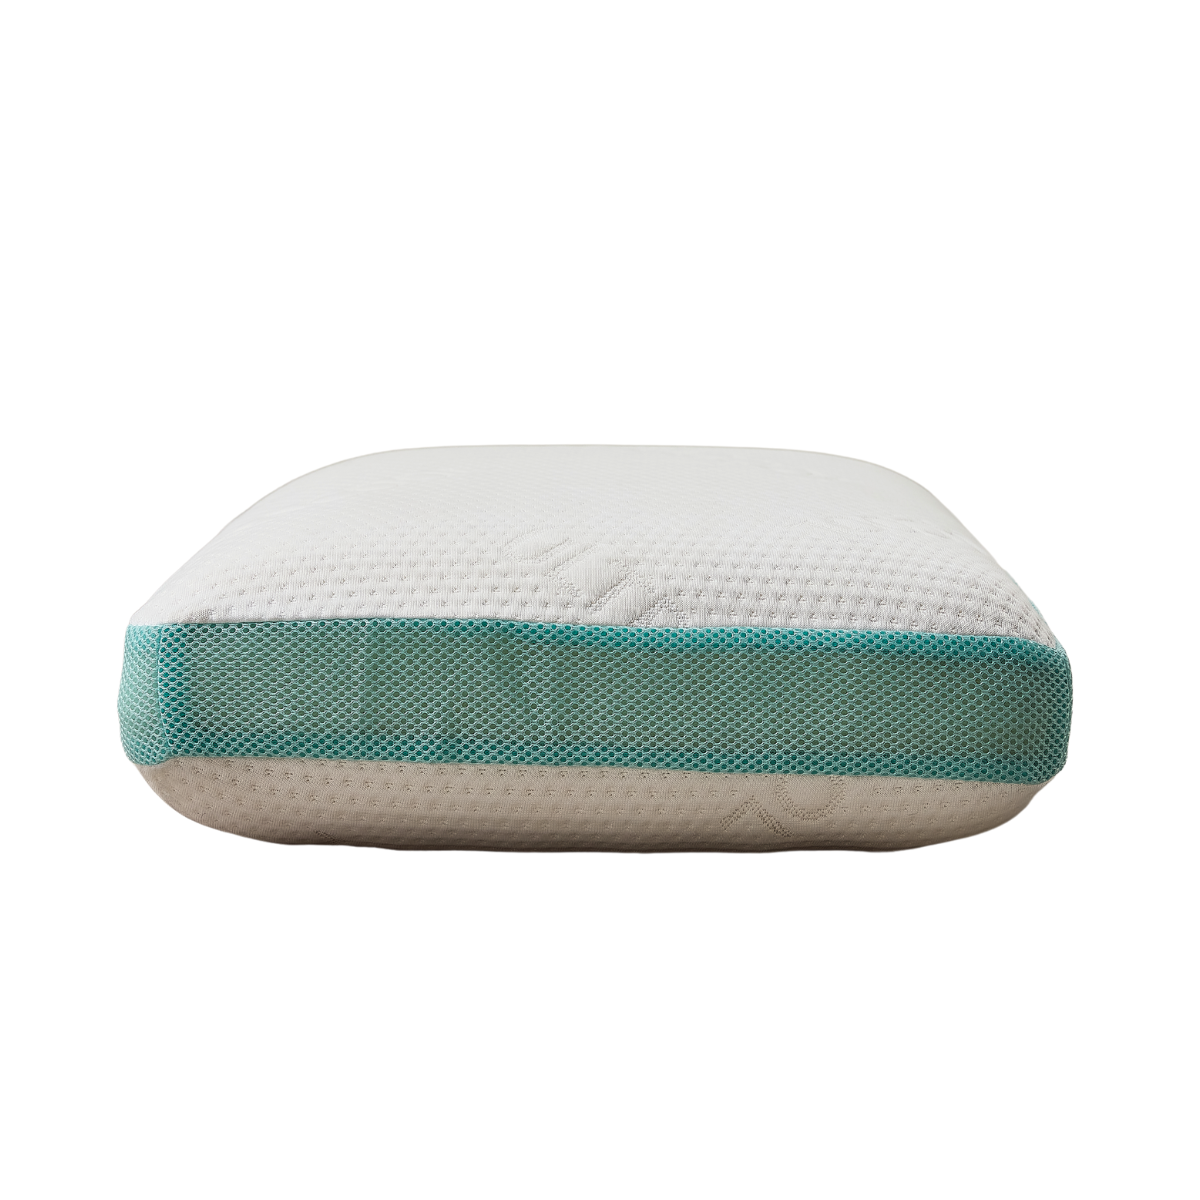 Ultimate Comfort Pillow Bundle (Medium Contour &amp; Therapeutic)